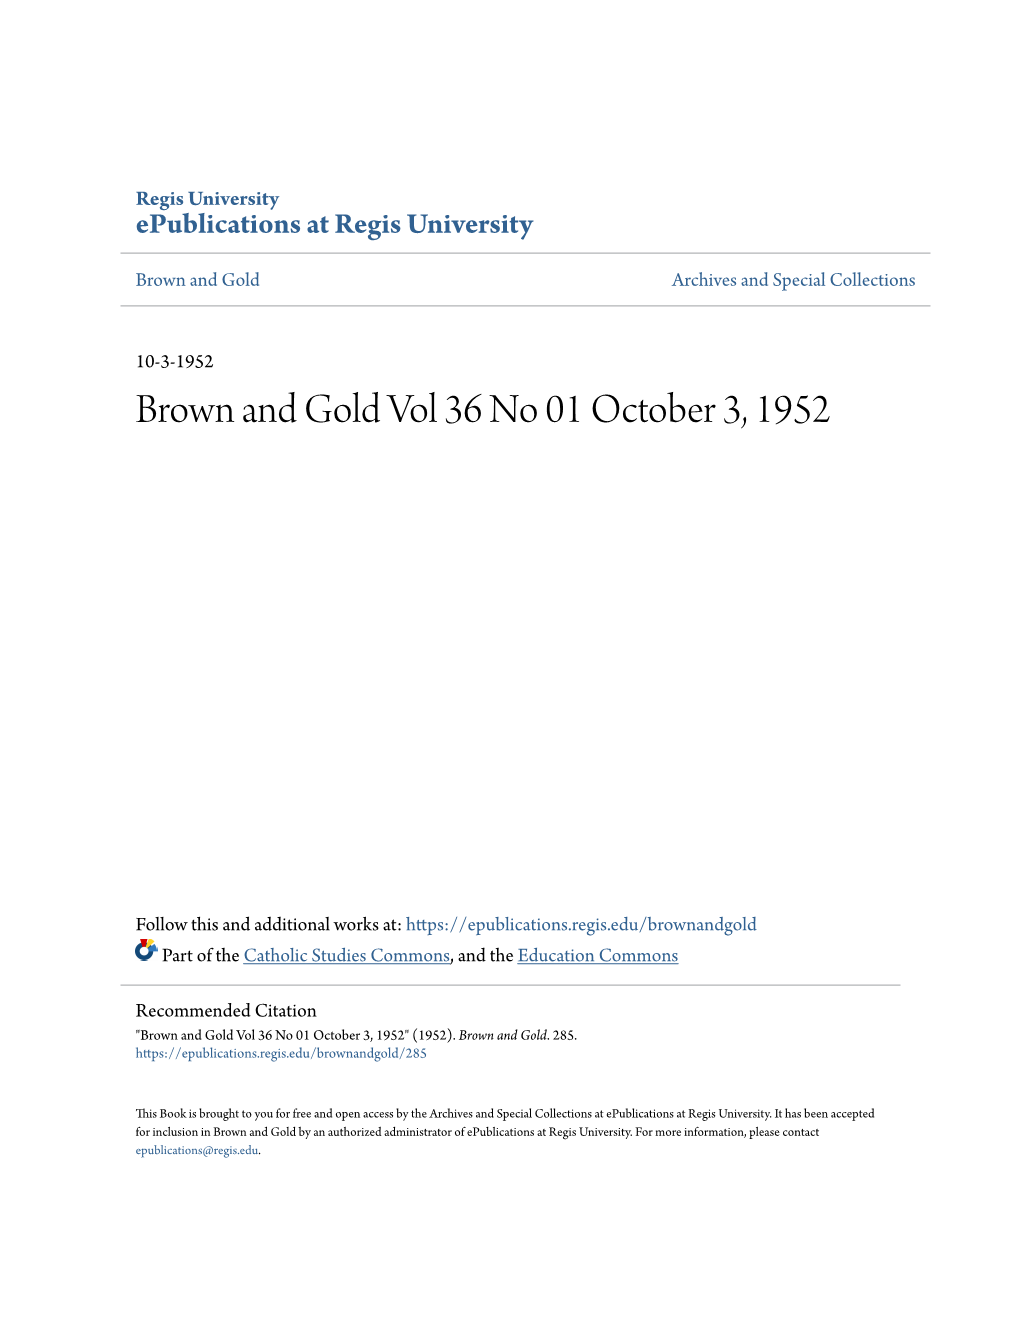 Brown and Gold Vol 36 No 01 October 3, 1952